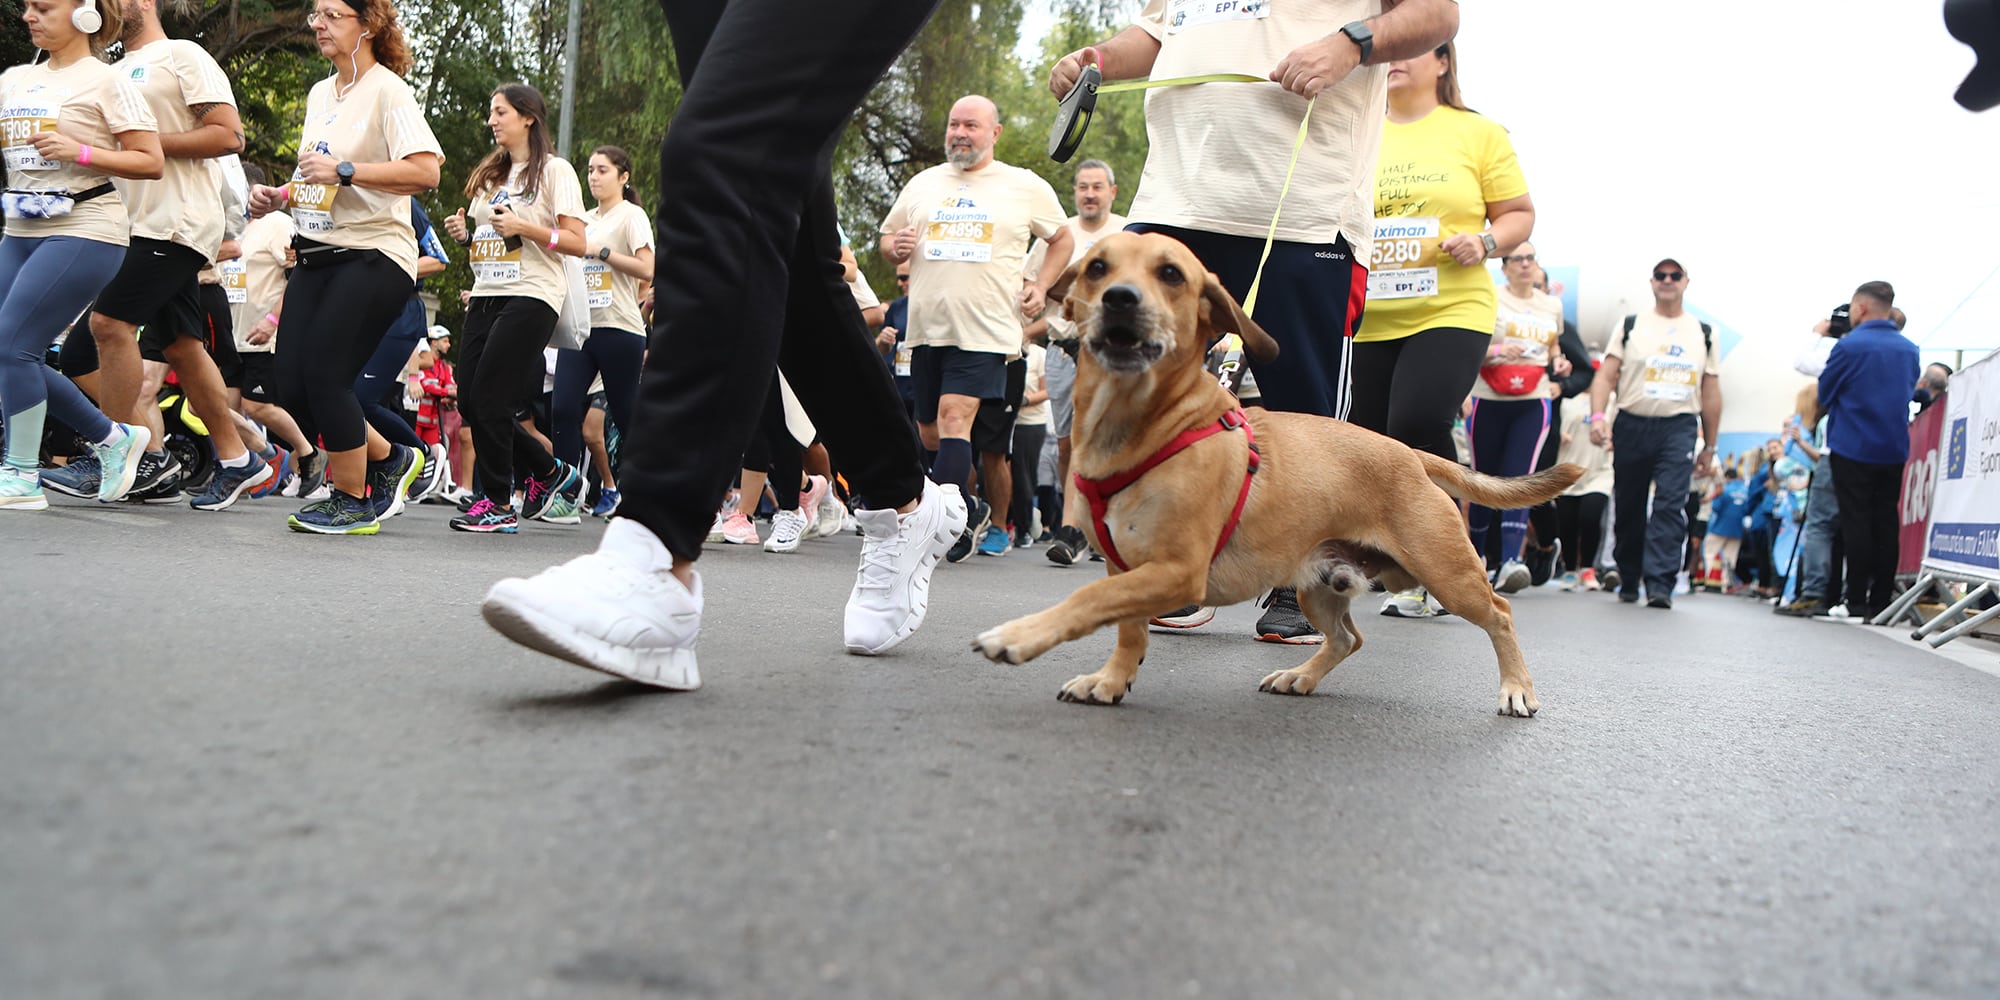 marathonios skilos - Μαραθώνιος: Έτρεξαν στο κέντρο της Αθήνας άνθρωποι με αμαξίδια, αλλά και με σκυλιά στην αγκαλιά (εικόνες)